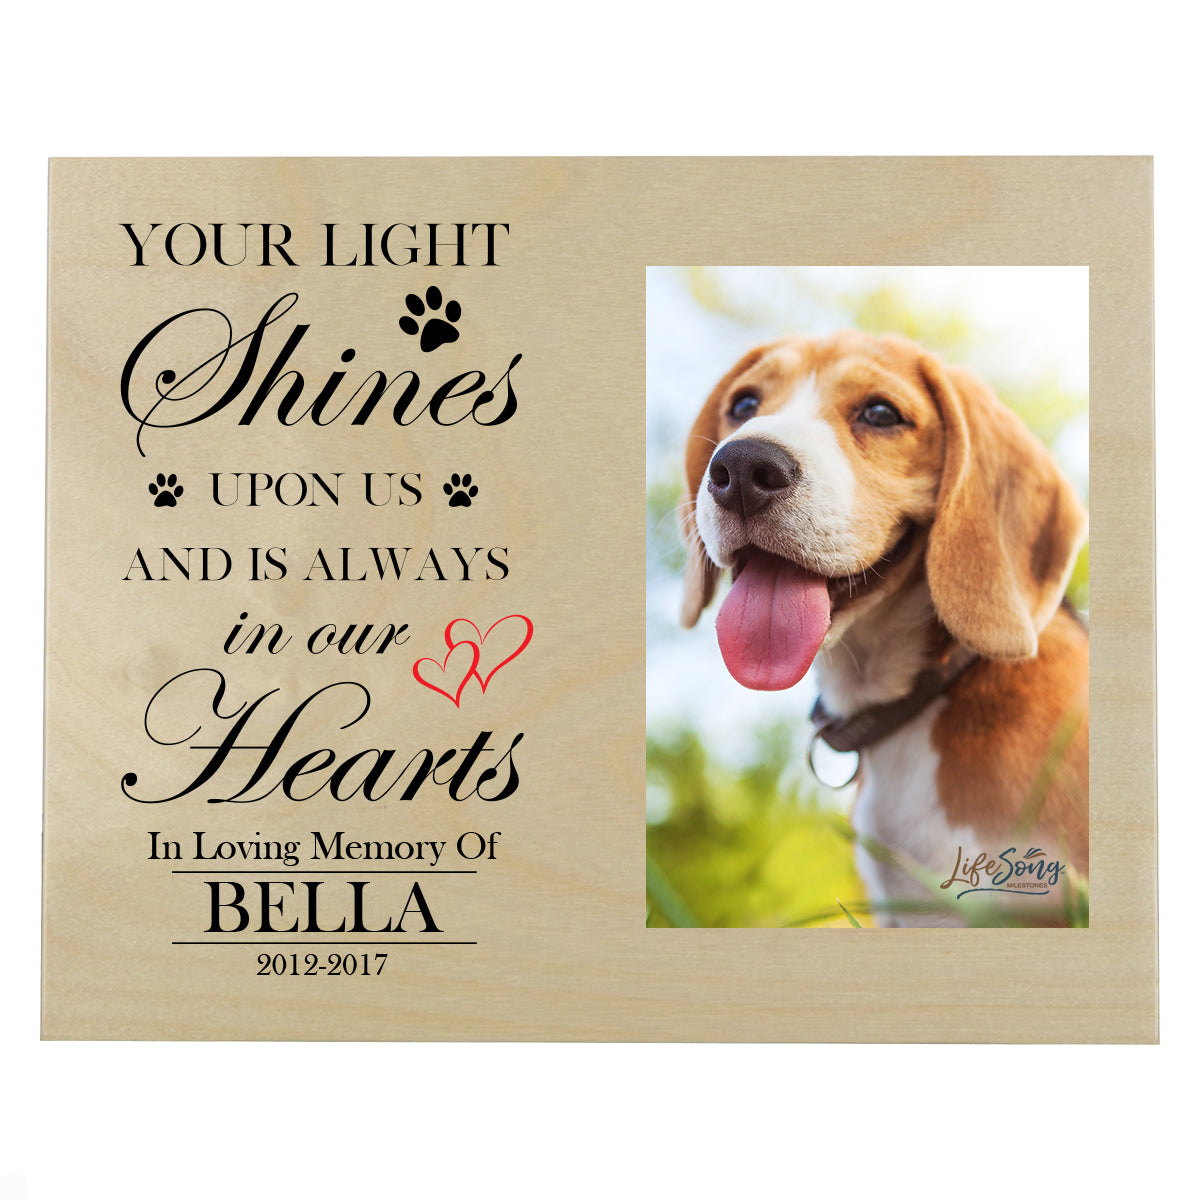 Pet Memorial Photo Wall Plaque Décor - Your Light Shines Upon Us